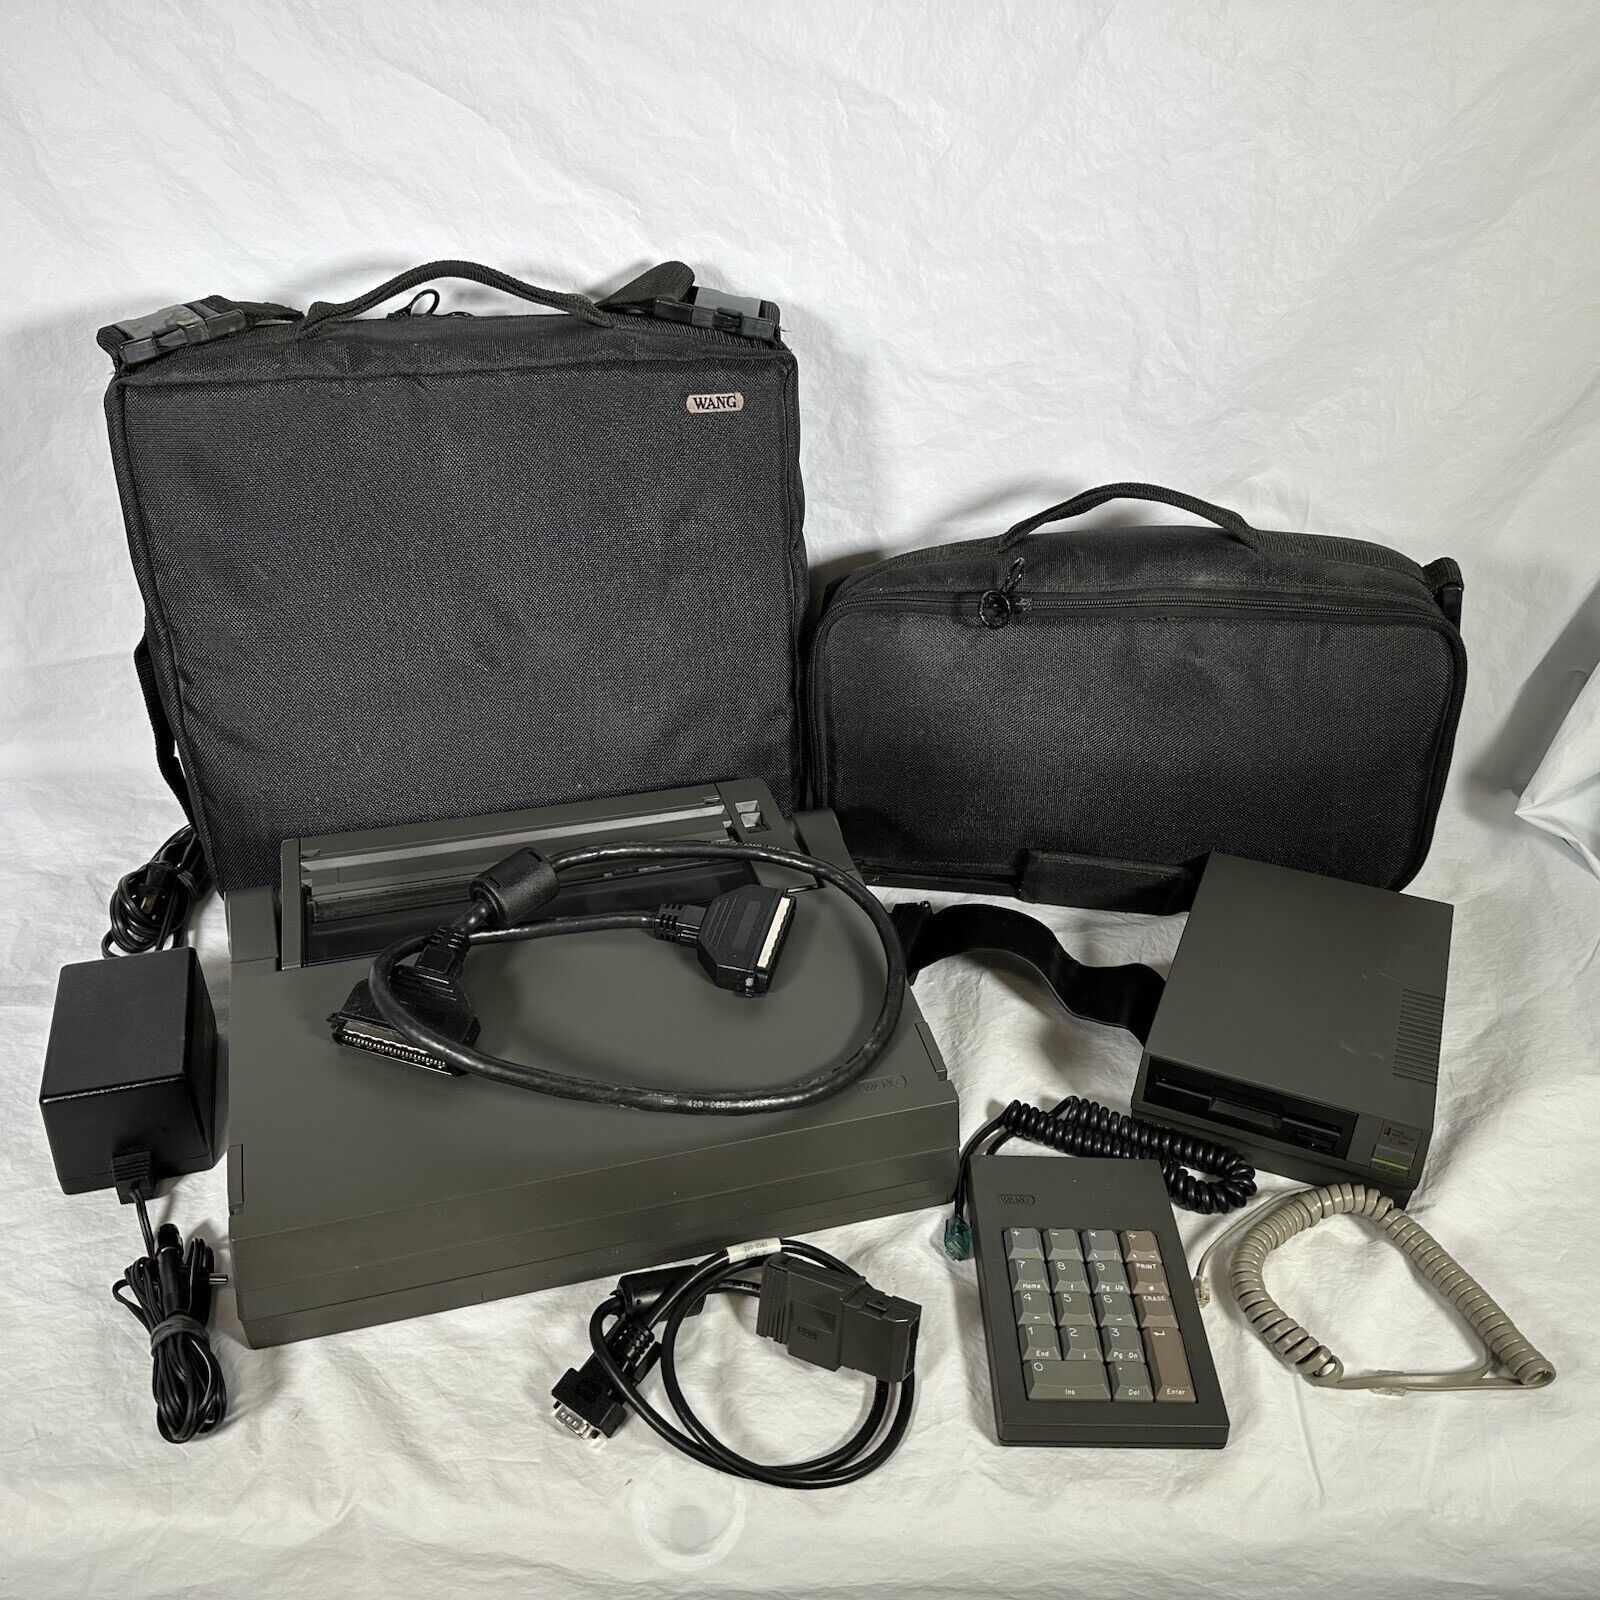 Rare Wang Portable Computer WLTC Complete W/ Keypad, Cords & Original Case